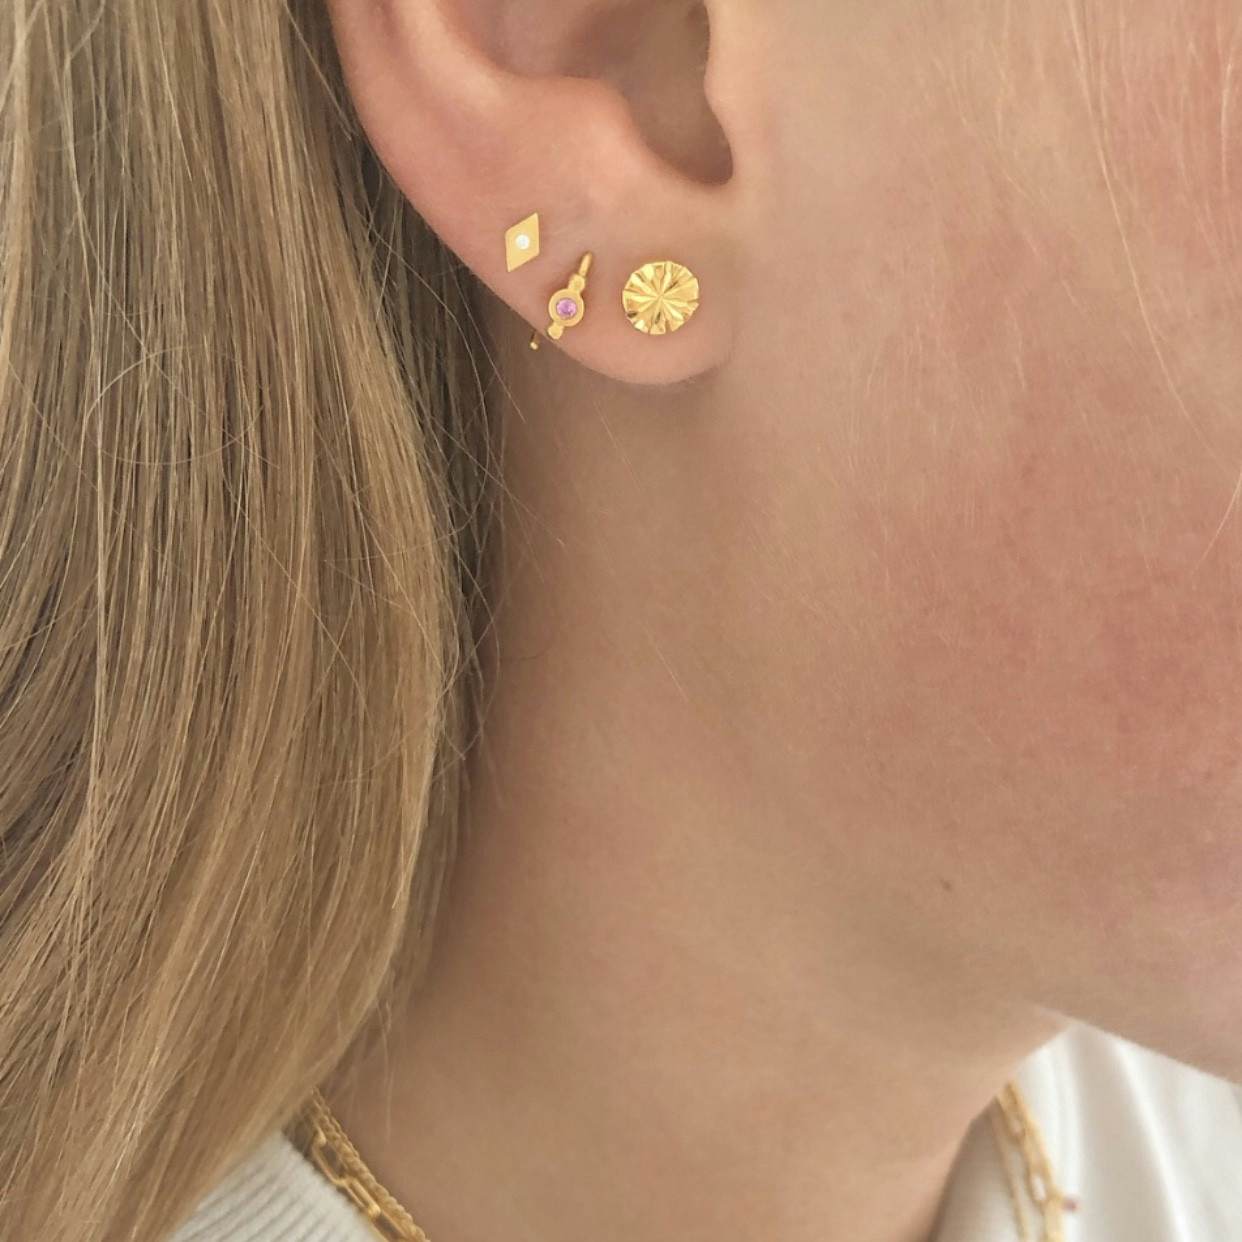 Petit Etoile Earring von STINE A Jewelry in Vergoldet-Silber Sterling 925